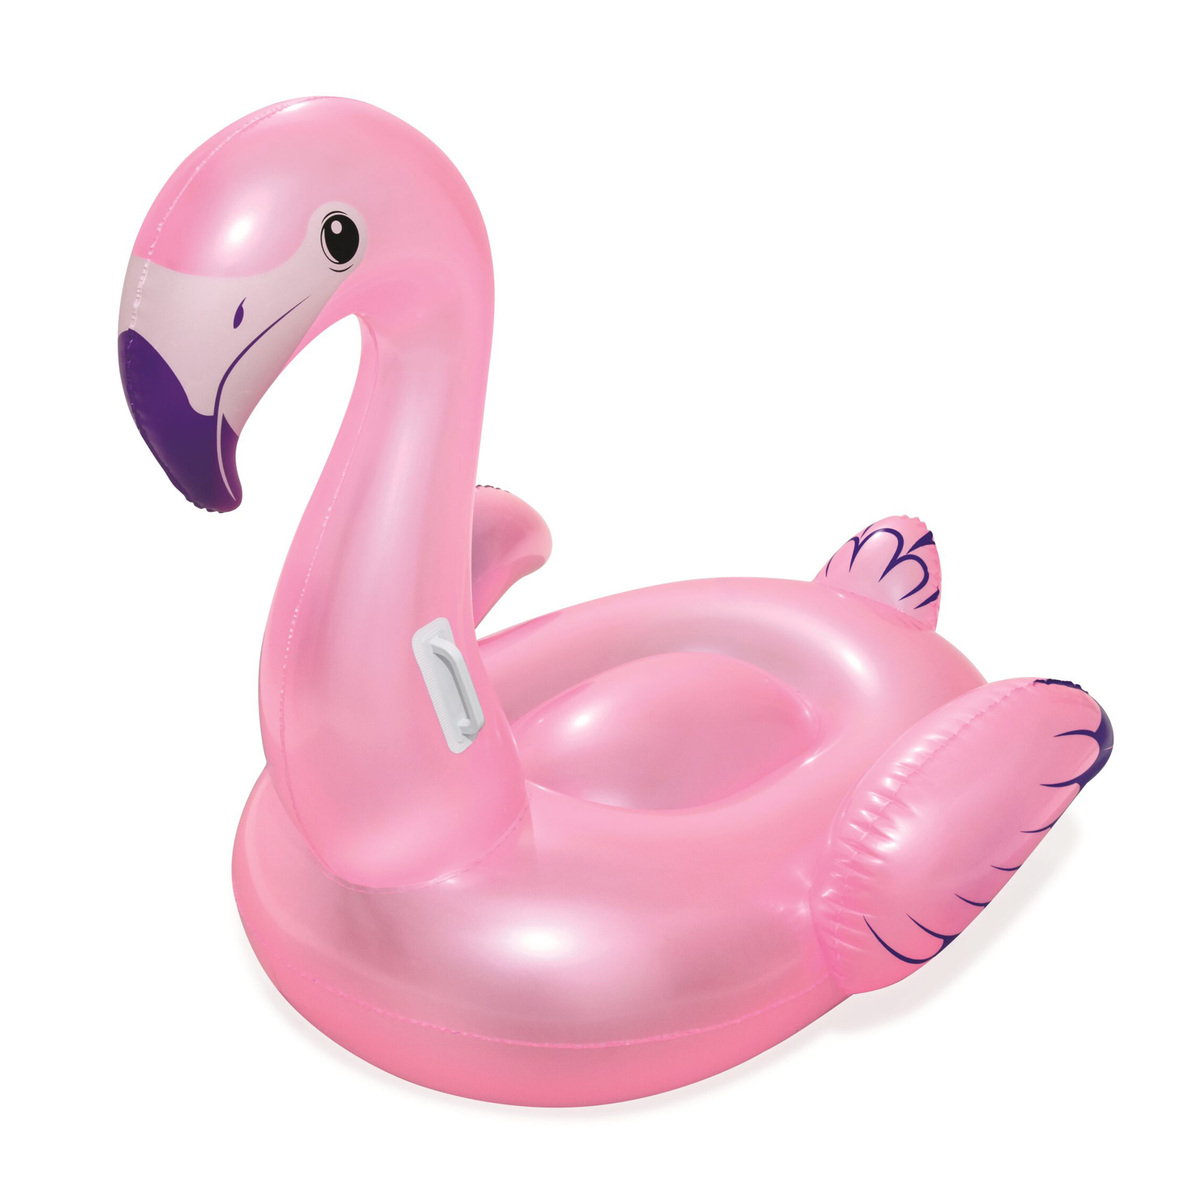 Bestway Inflatable Flamingo Pool Ride-On, 41122